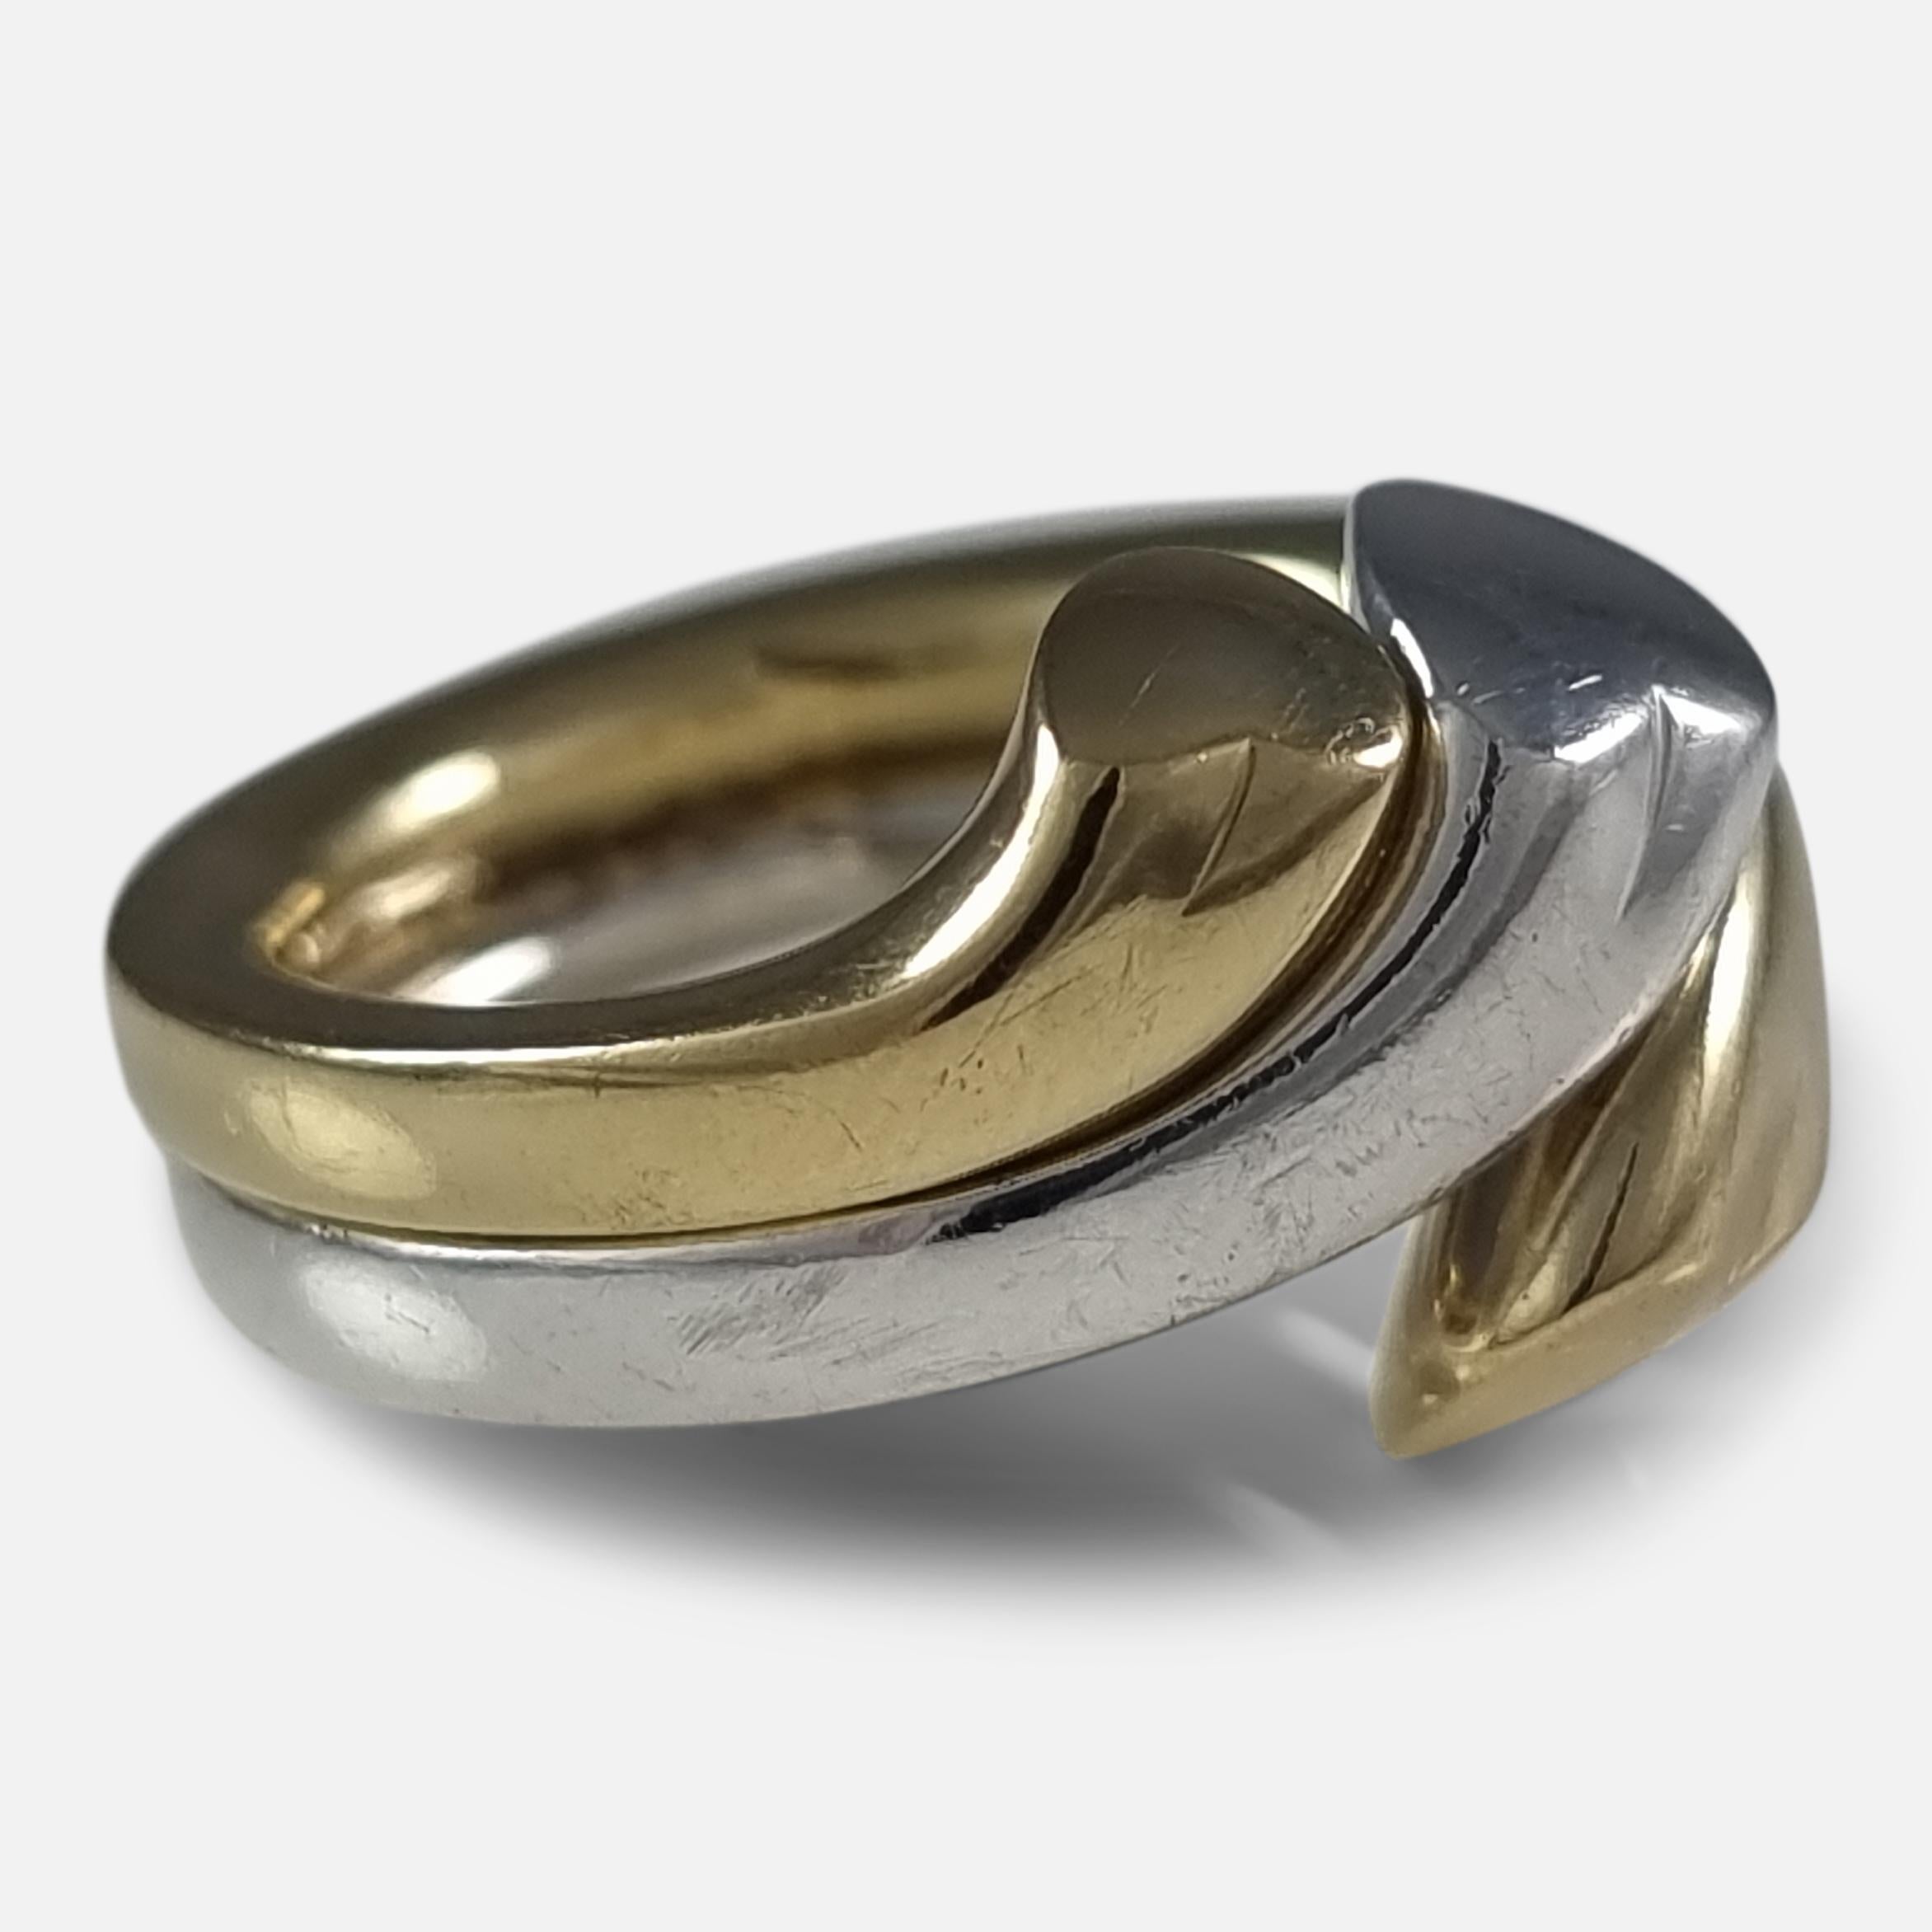 Georg Jensen 18ct Gold and Silver 'Devoted Heart' Ring, Regitze Overgaard 6